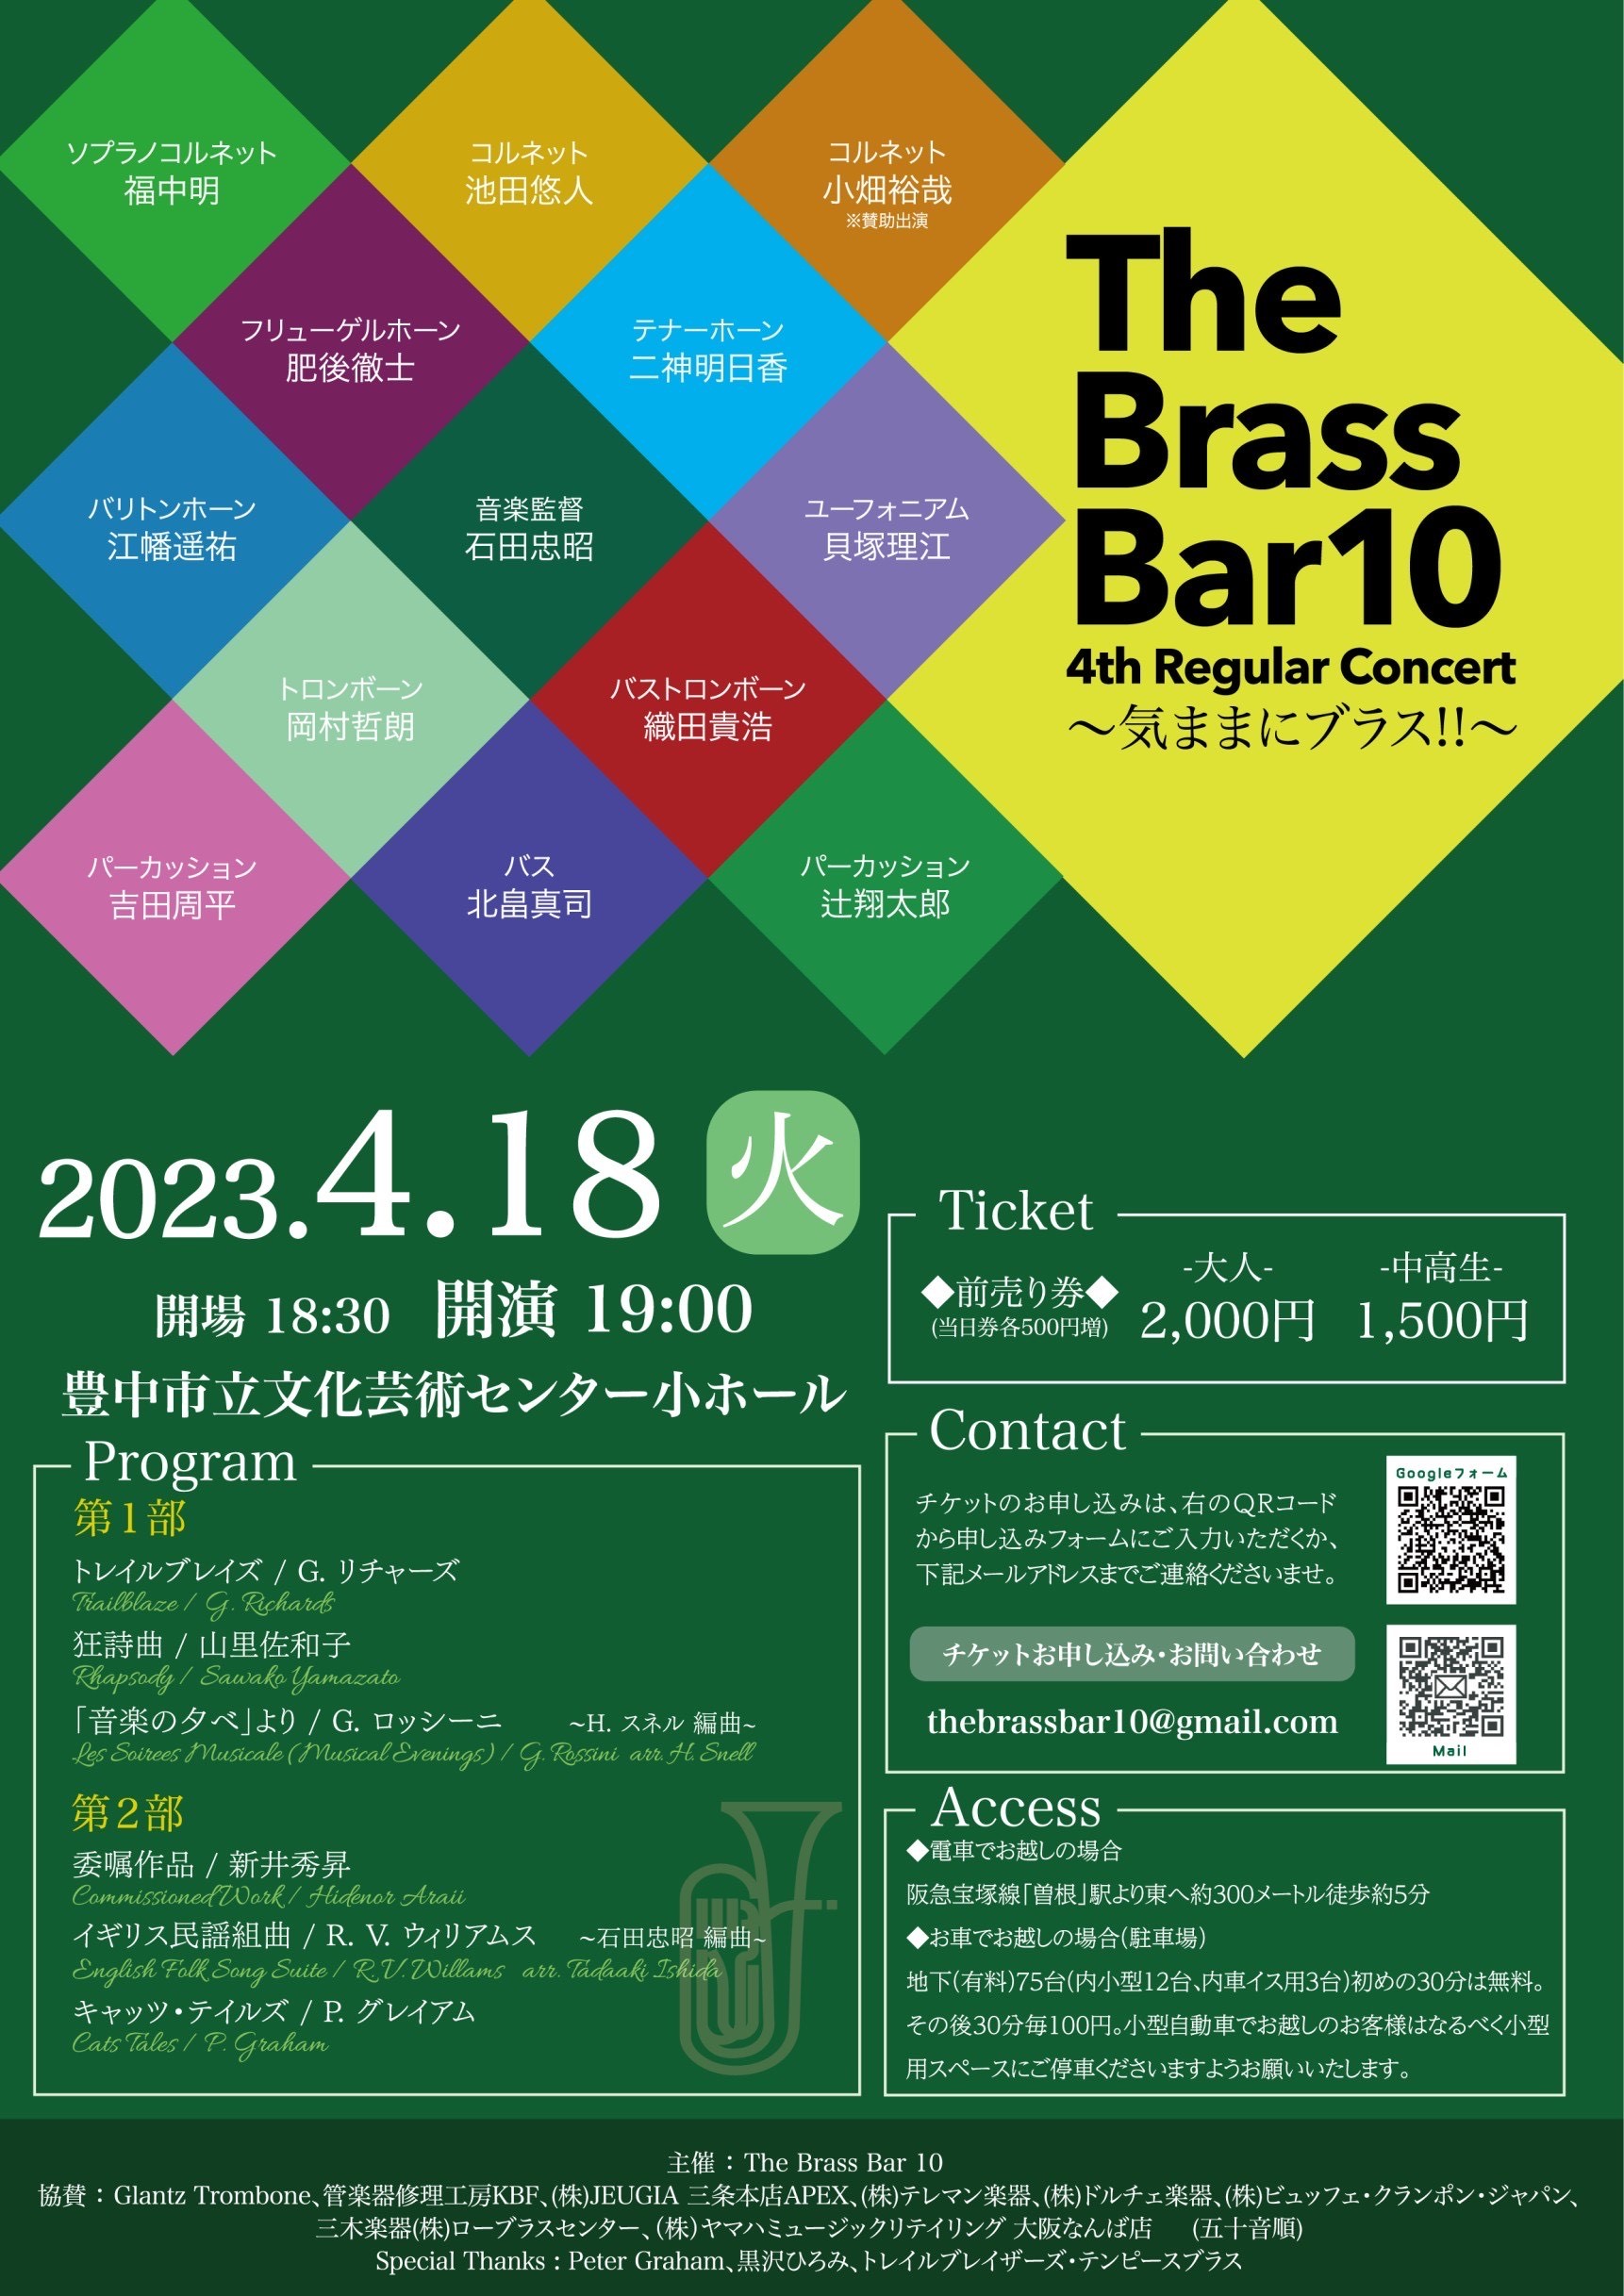 The Brass Bar10 4th Regular Concert<br>～気ままにブラス！！～